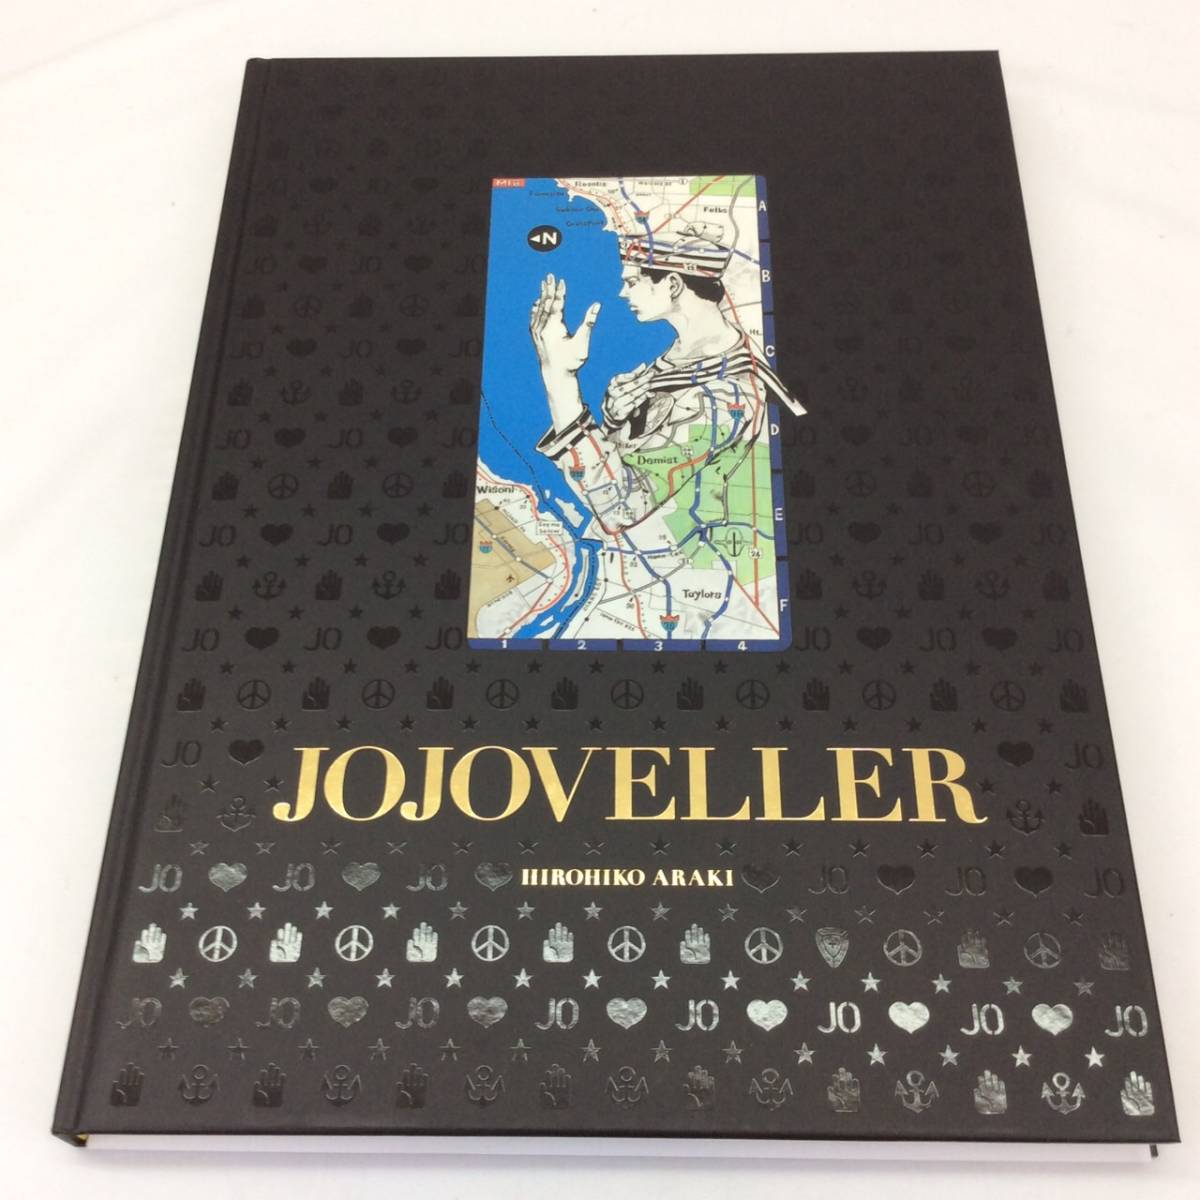 No.2688【画集】ジョジョの奇妙な冒険25周年記念画集 JOJOVELLER 豪華